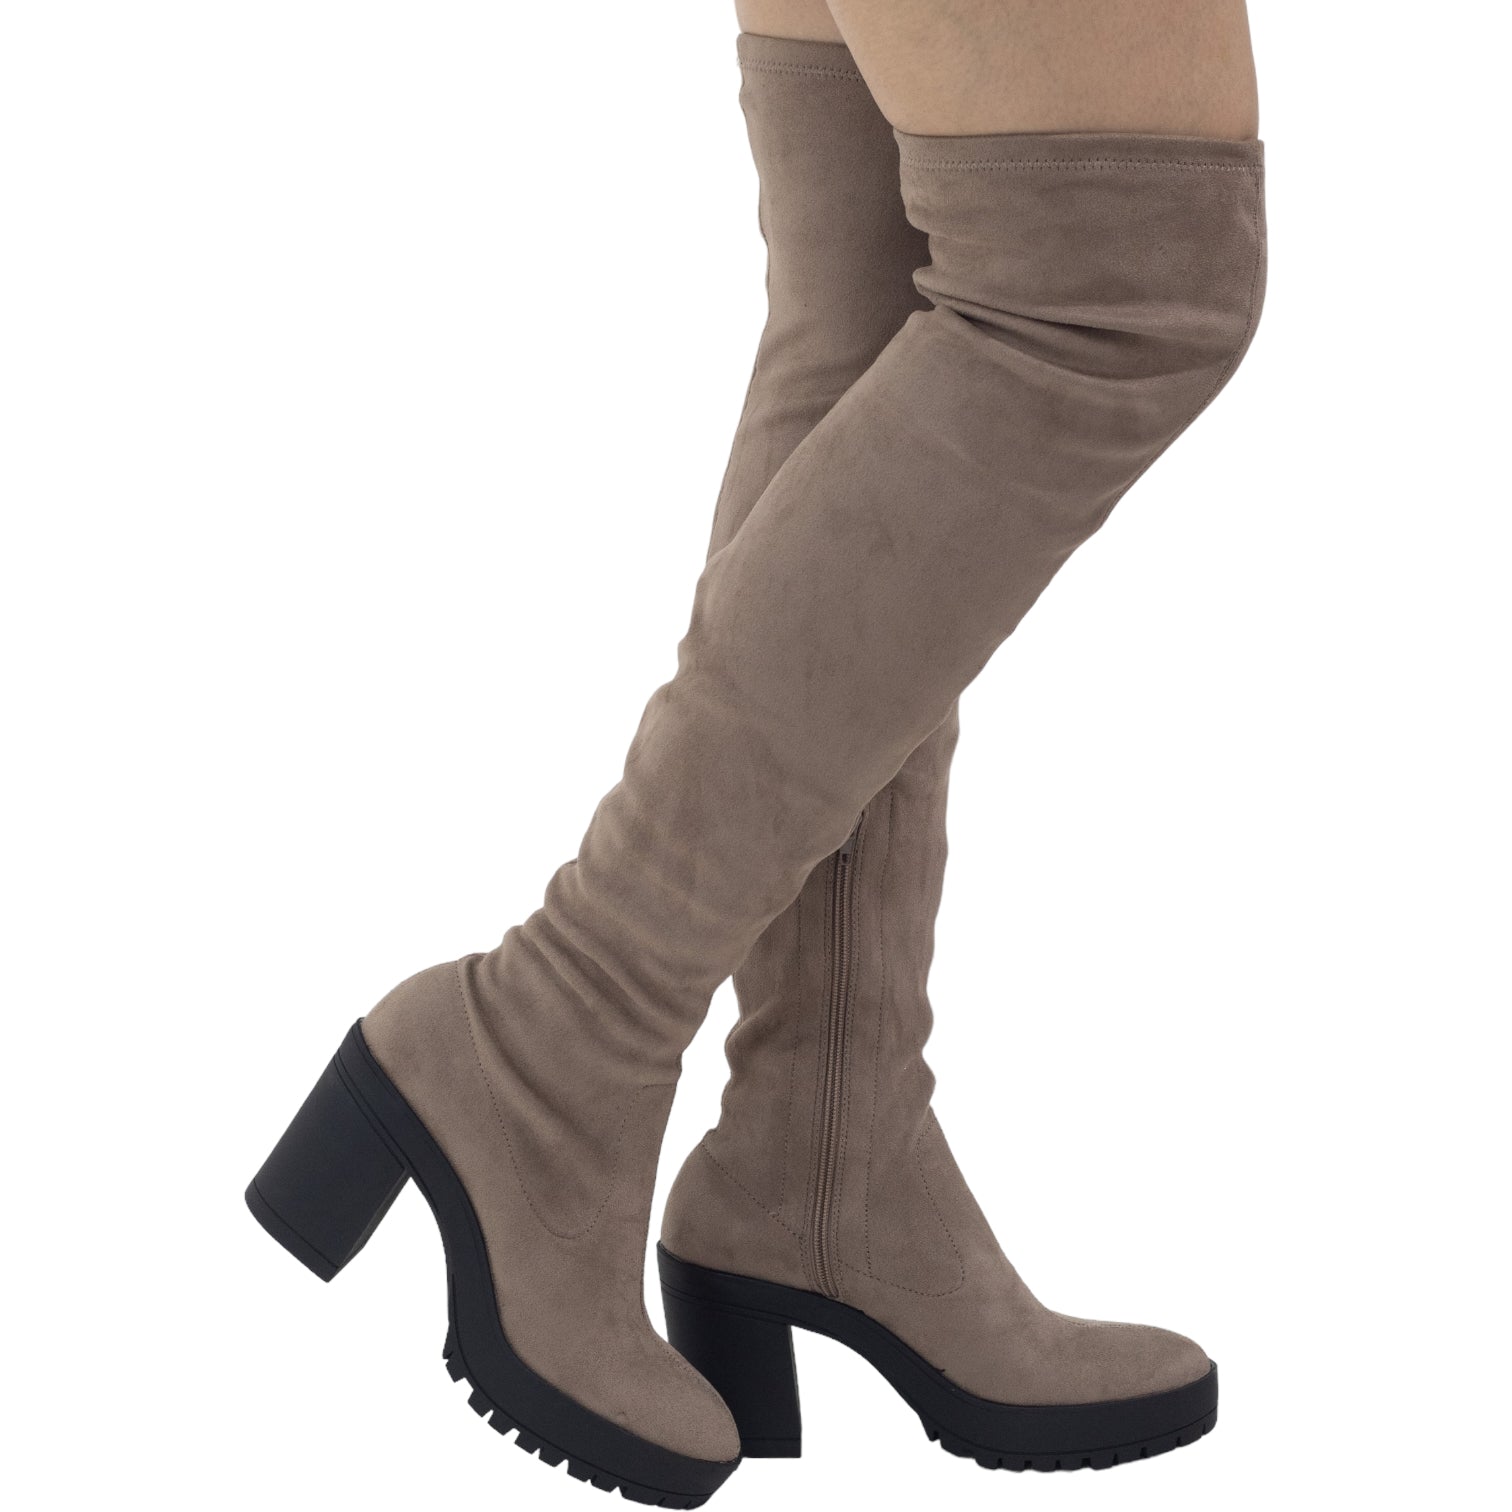 Garnet thigh high back boot 9cm heel taupe